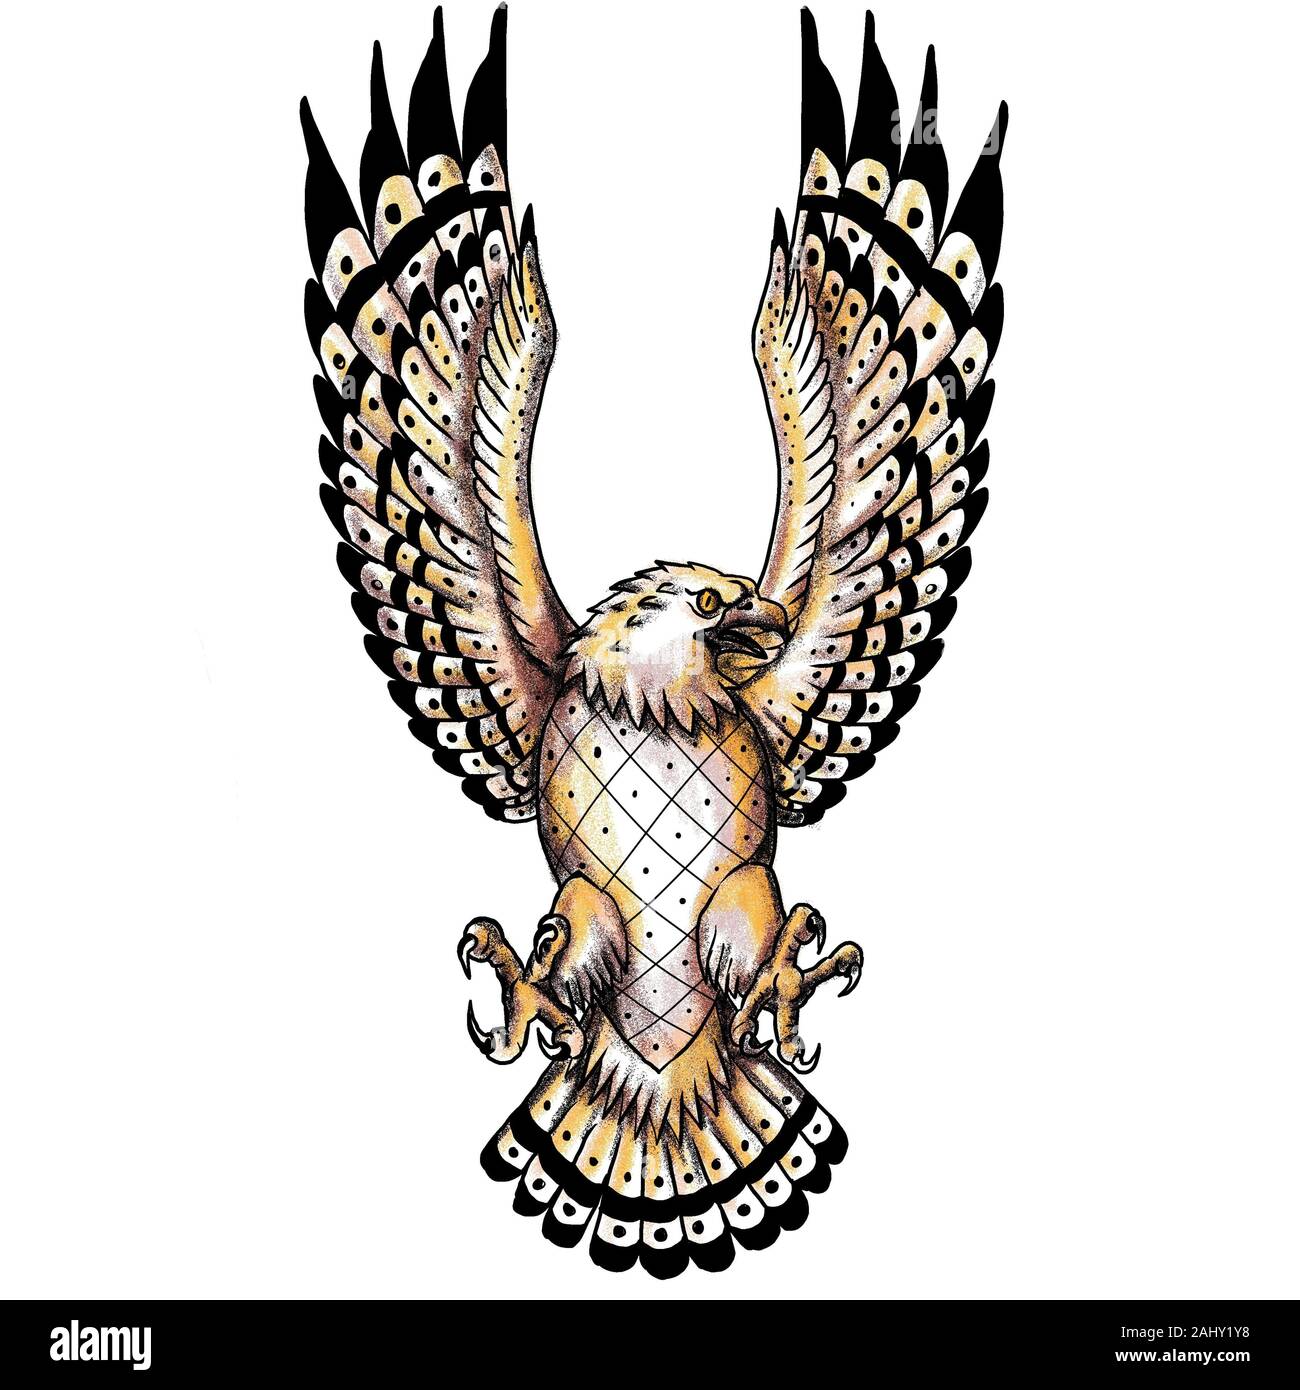 Tattoo style illustration of an osprey, Pandion haliaetus also